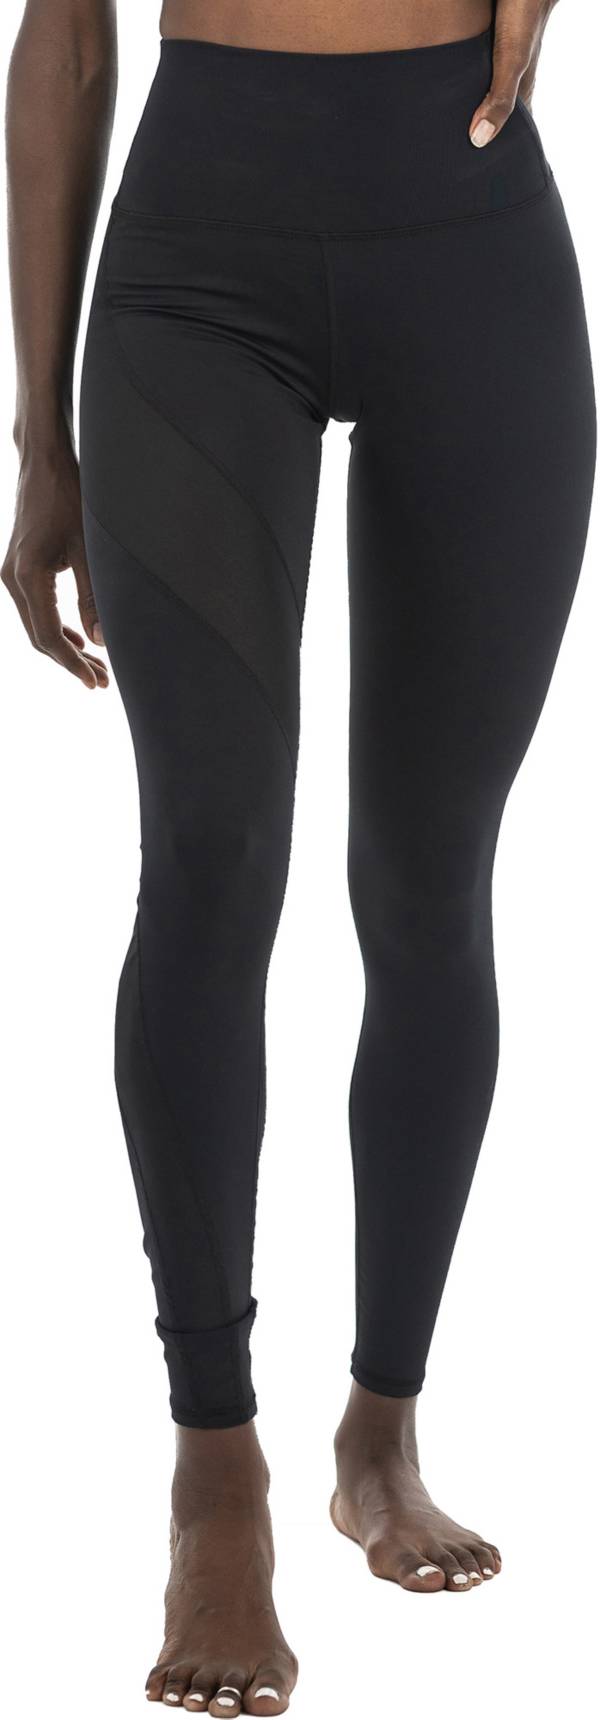 Solely Fit Women's Aminatu Mesh Leggings product image